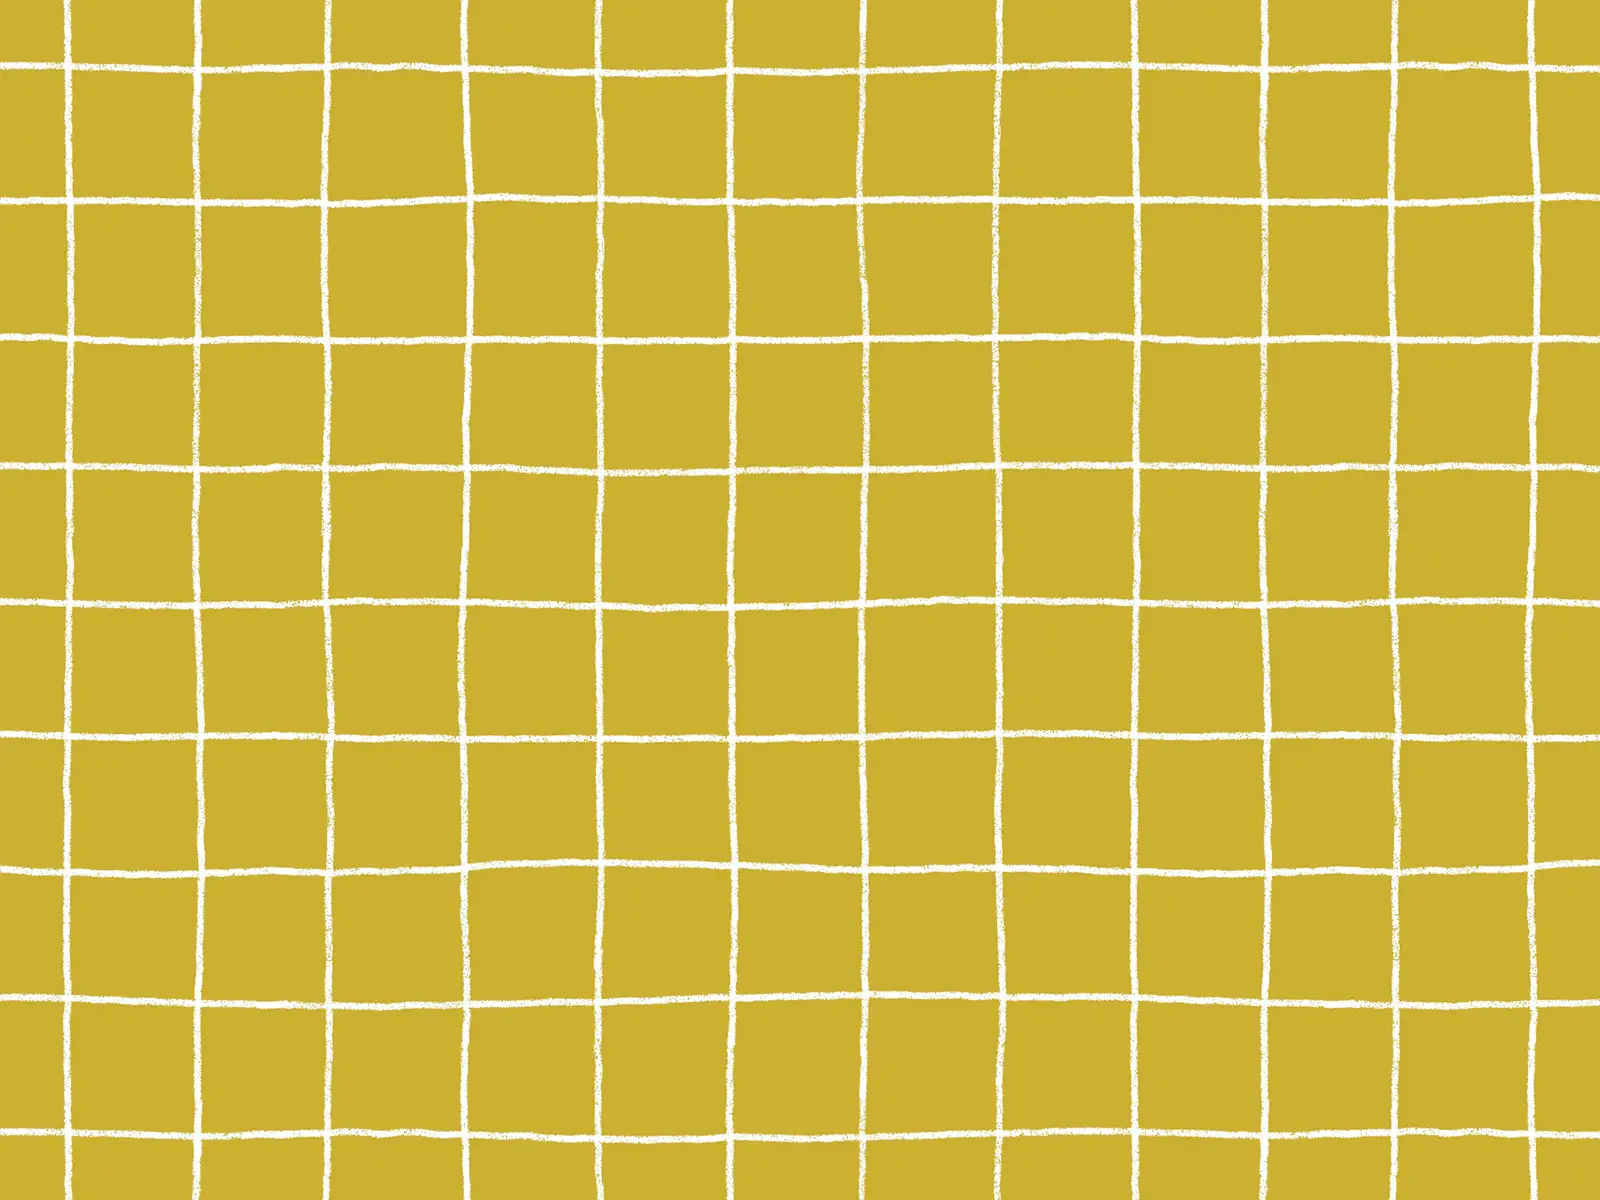 Yellow grid pattern